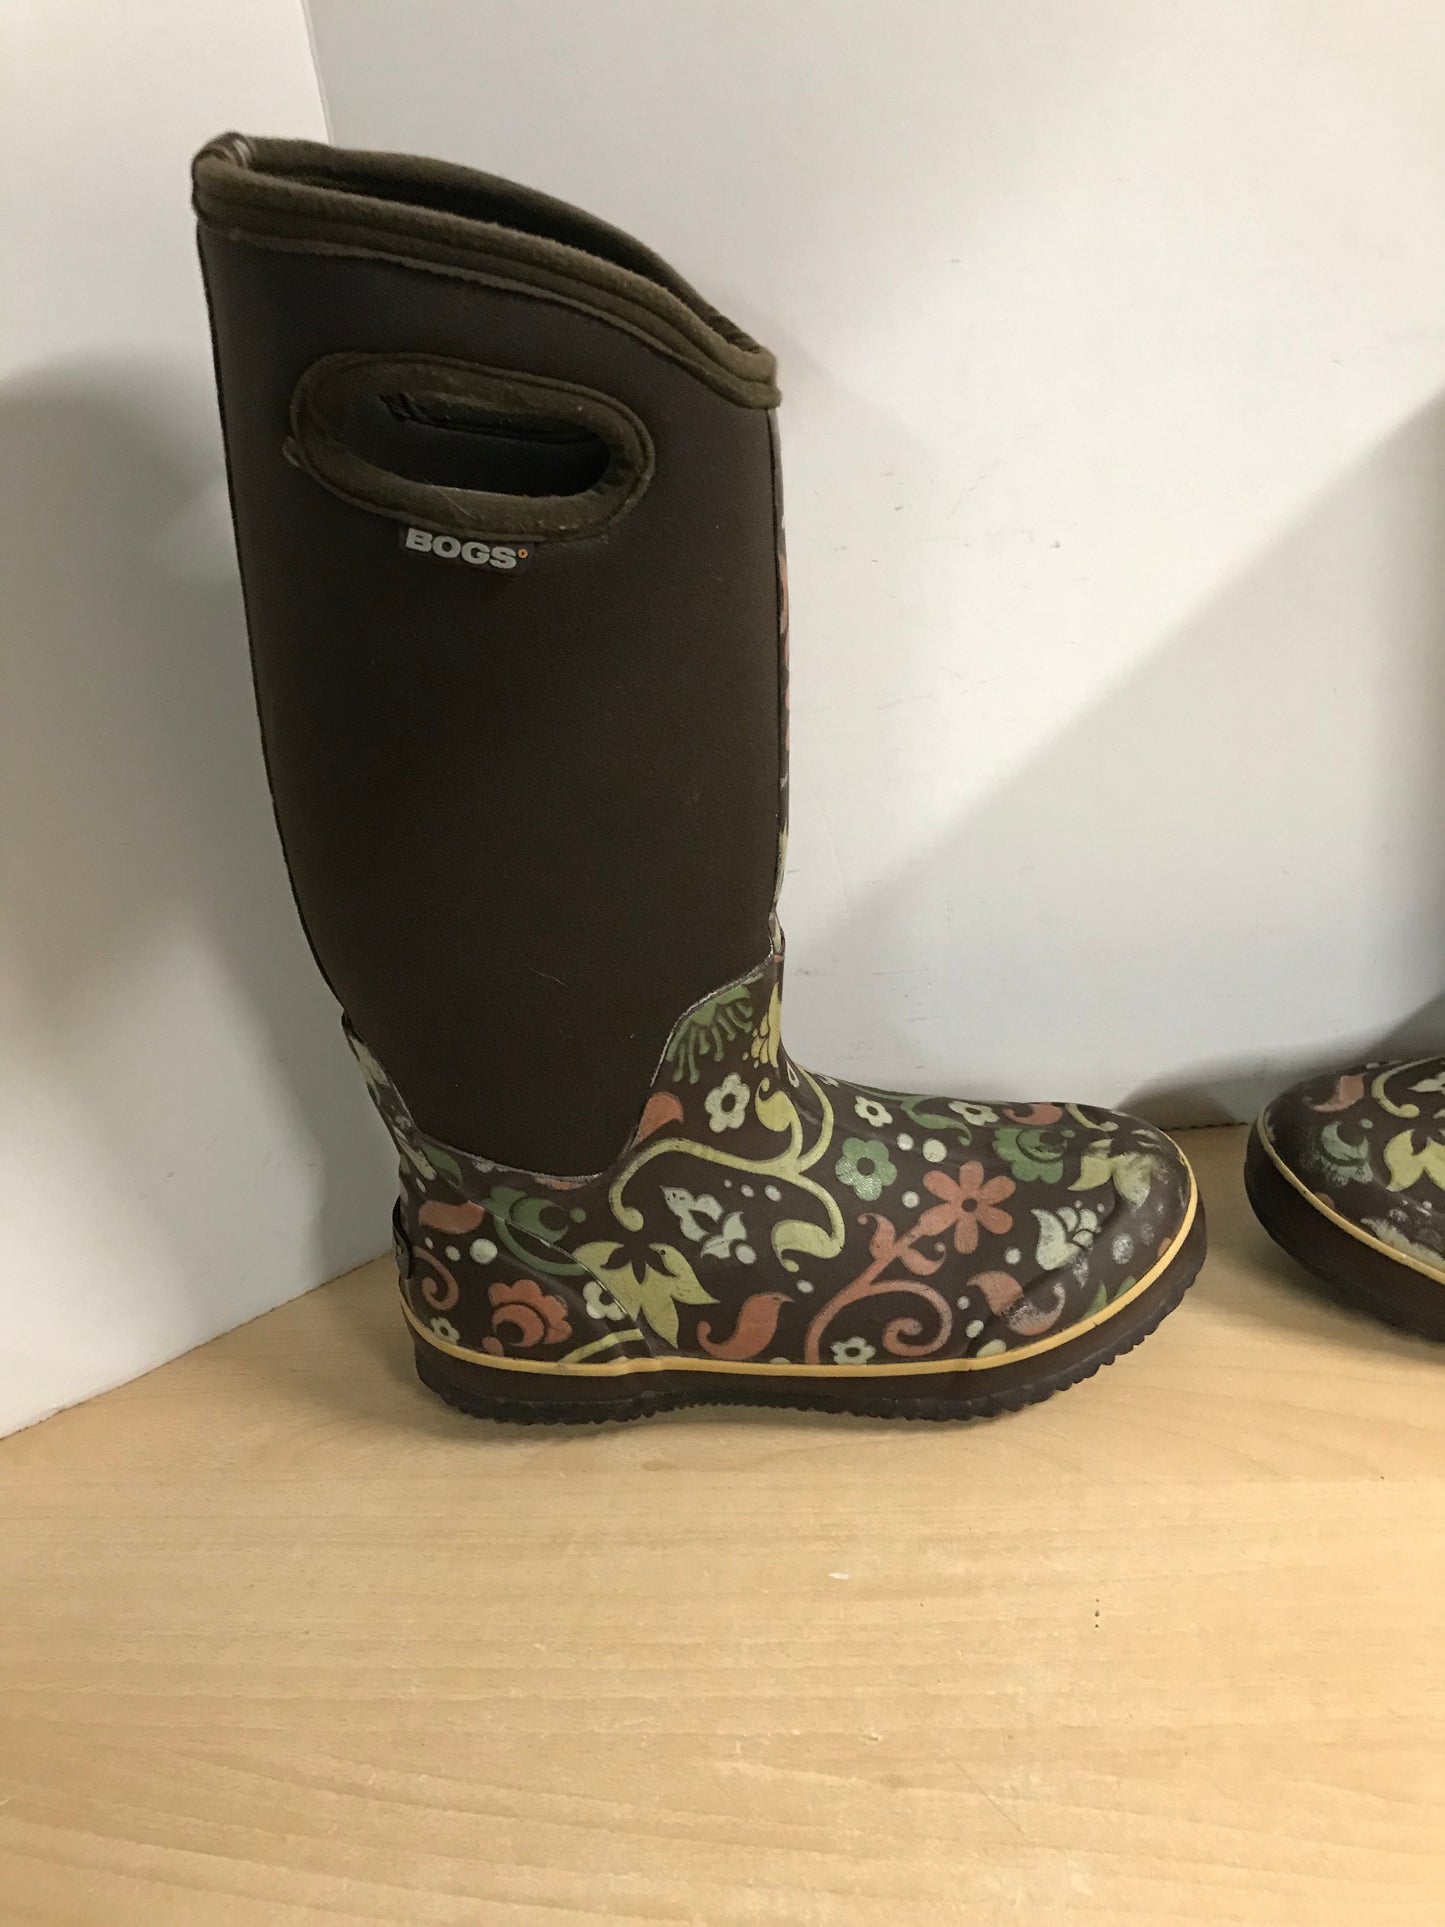 Bogs Brand Ladies Size 7 Winter Rain Boots Brown Floral Neorprene